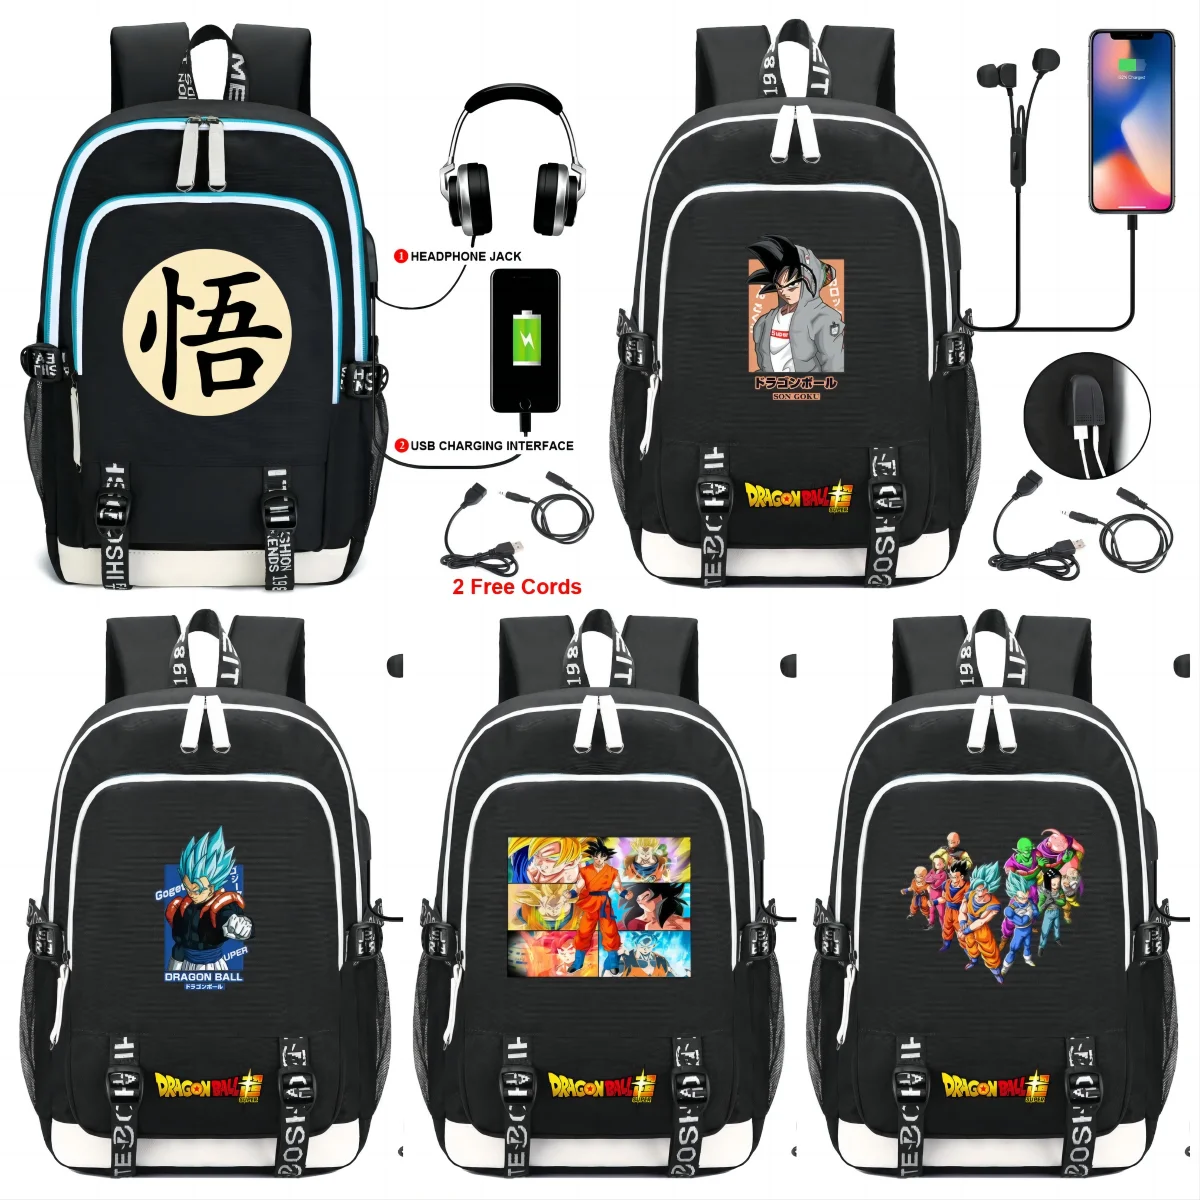 

Dragon Ball Backpacks Goku USB Charge Travel Teens Boys School Students Bag Men Fashion School Casual Laptop Mochilas Gifts